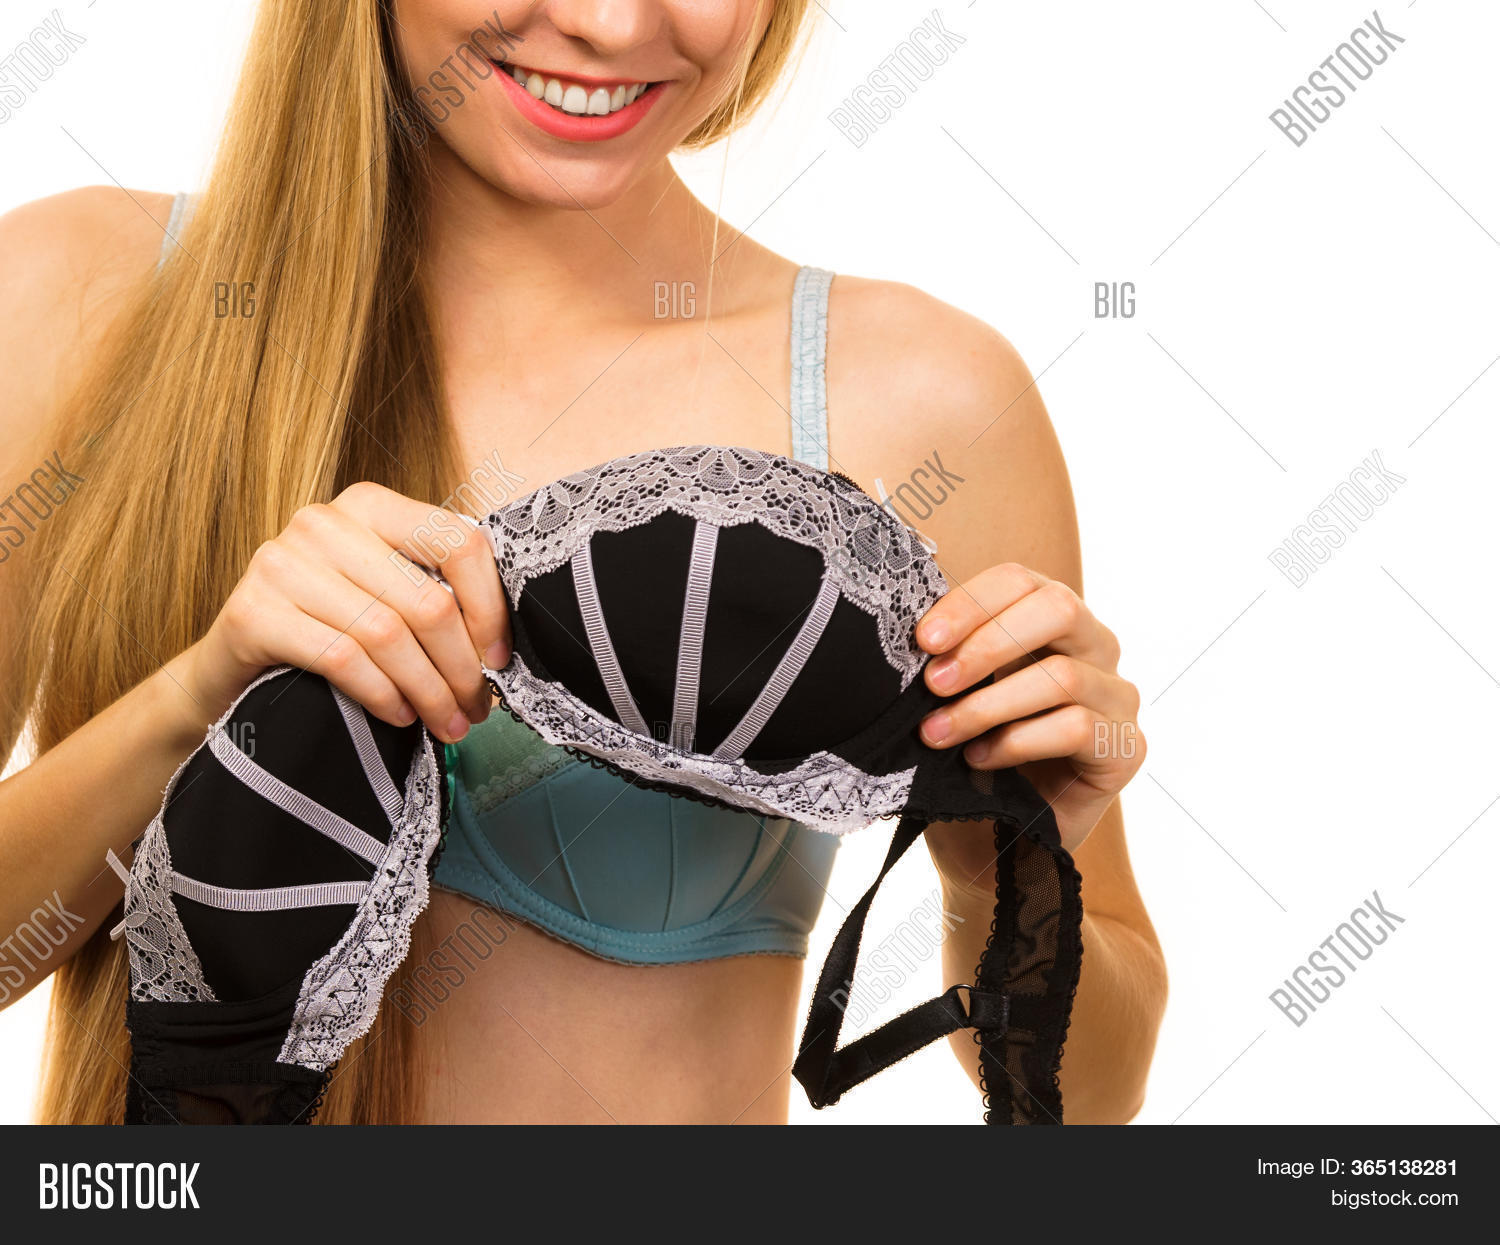 denisse ortiz add photo women trying on lingerie